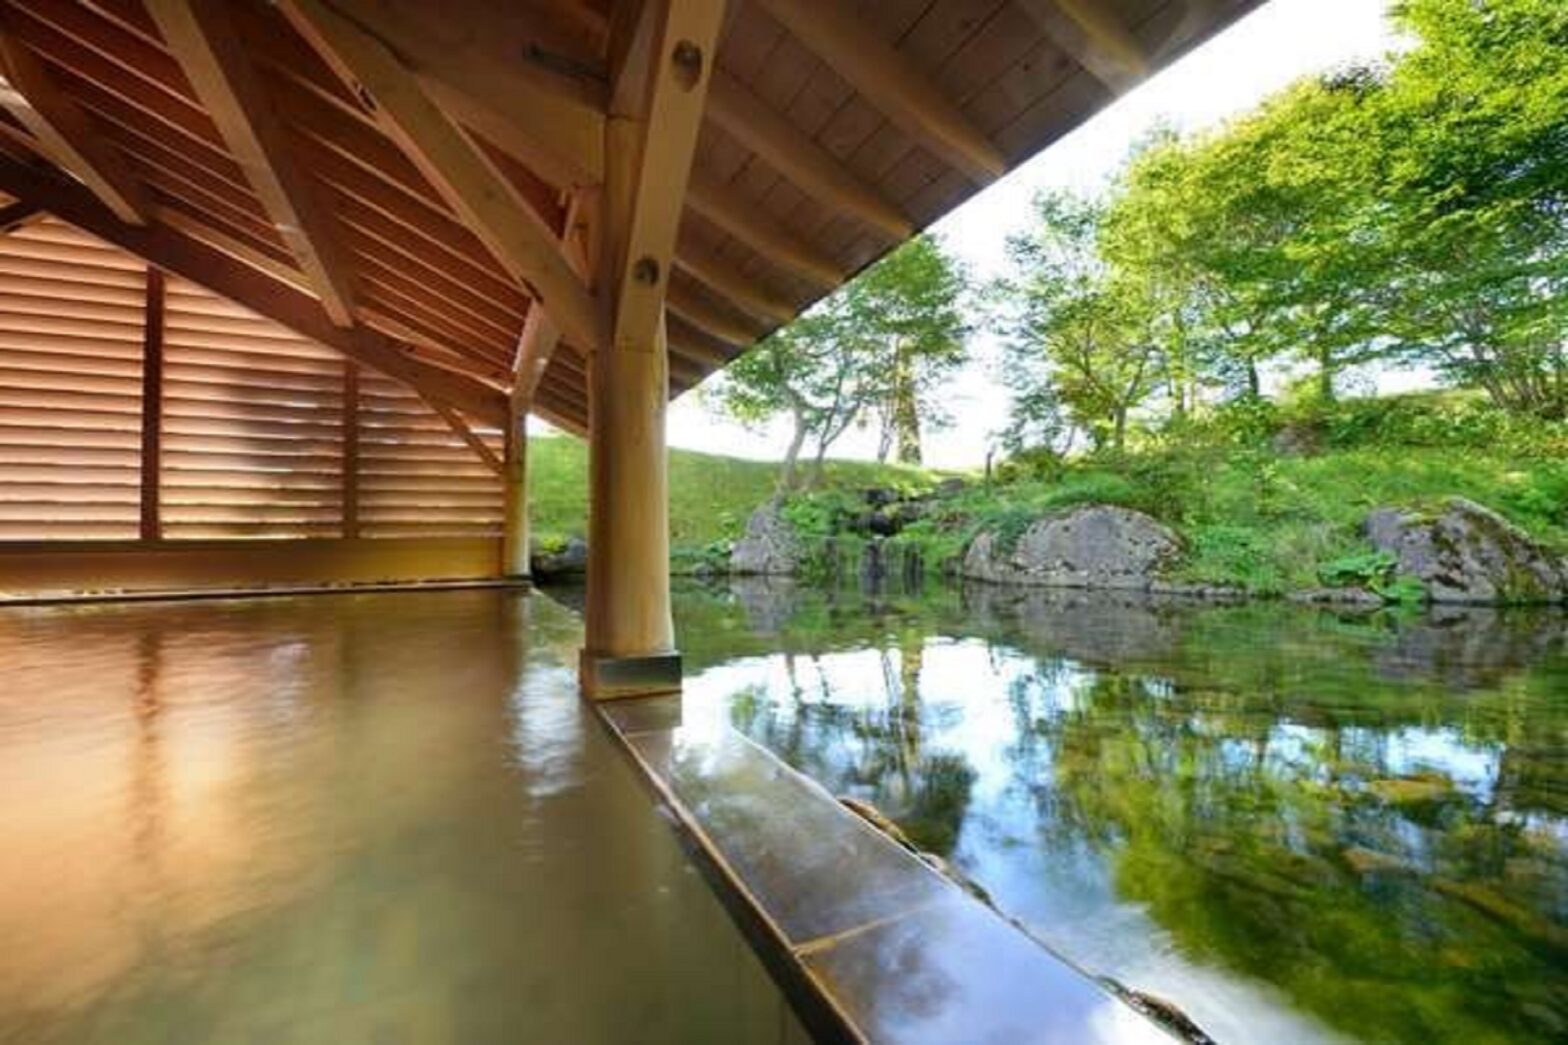 Outdoor Hot Springs “Takakura Onsen”